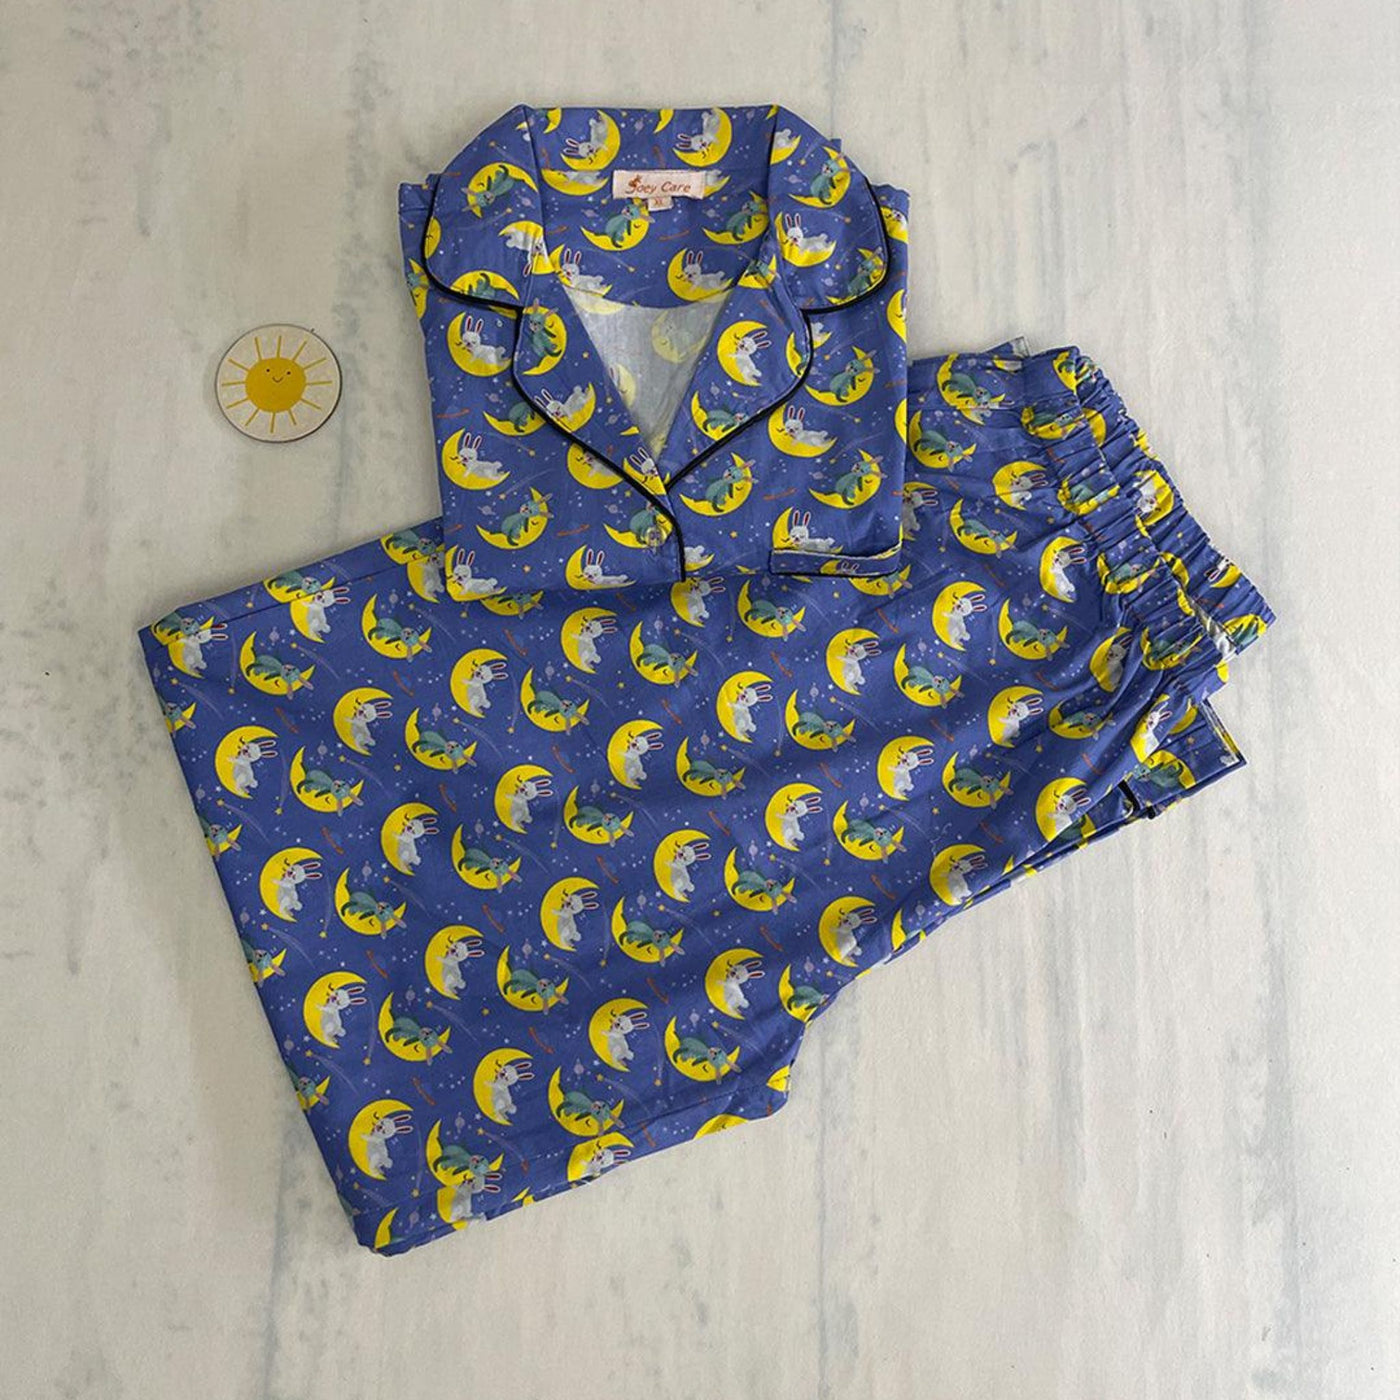 Pocket Nightwear for Girls and Boys - Sleeping Bunny Joeycare 